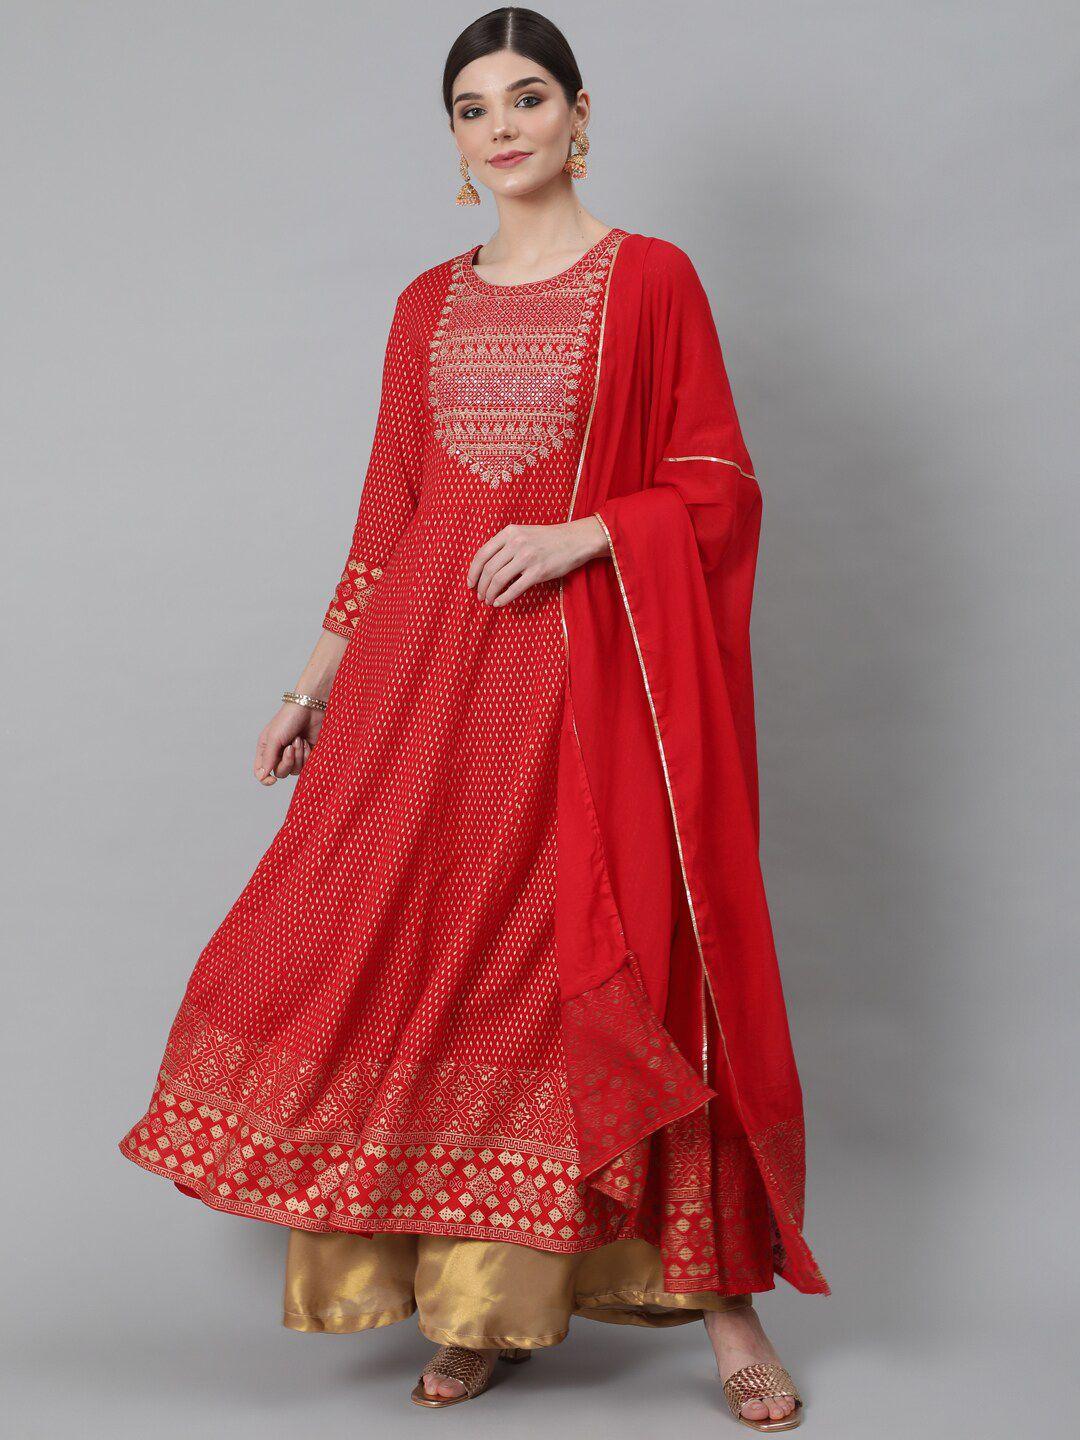 anubhutee-women-red-ethnic-motifs-printed-anarkali-kurta-with-dupatta